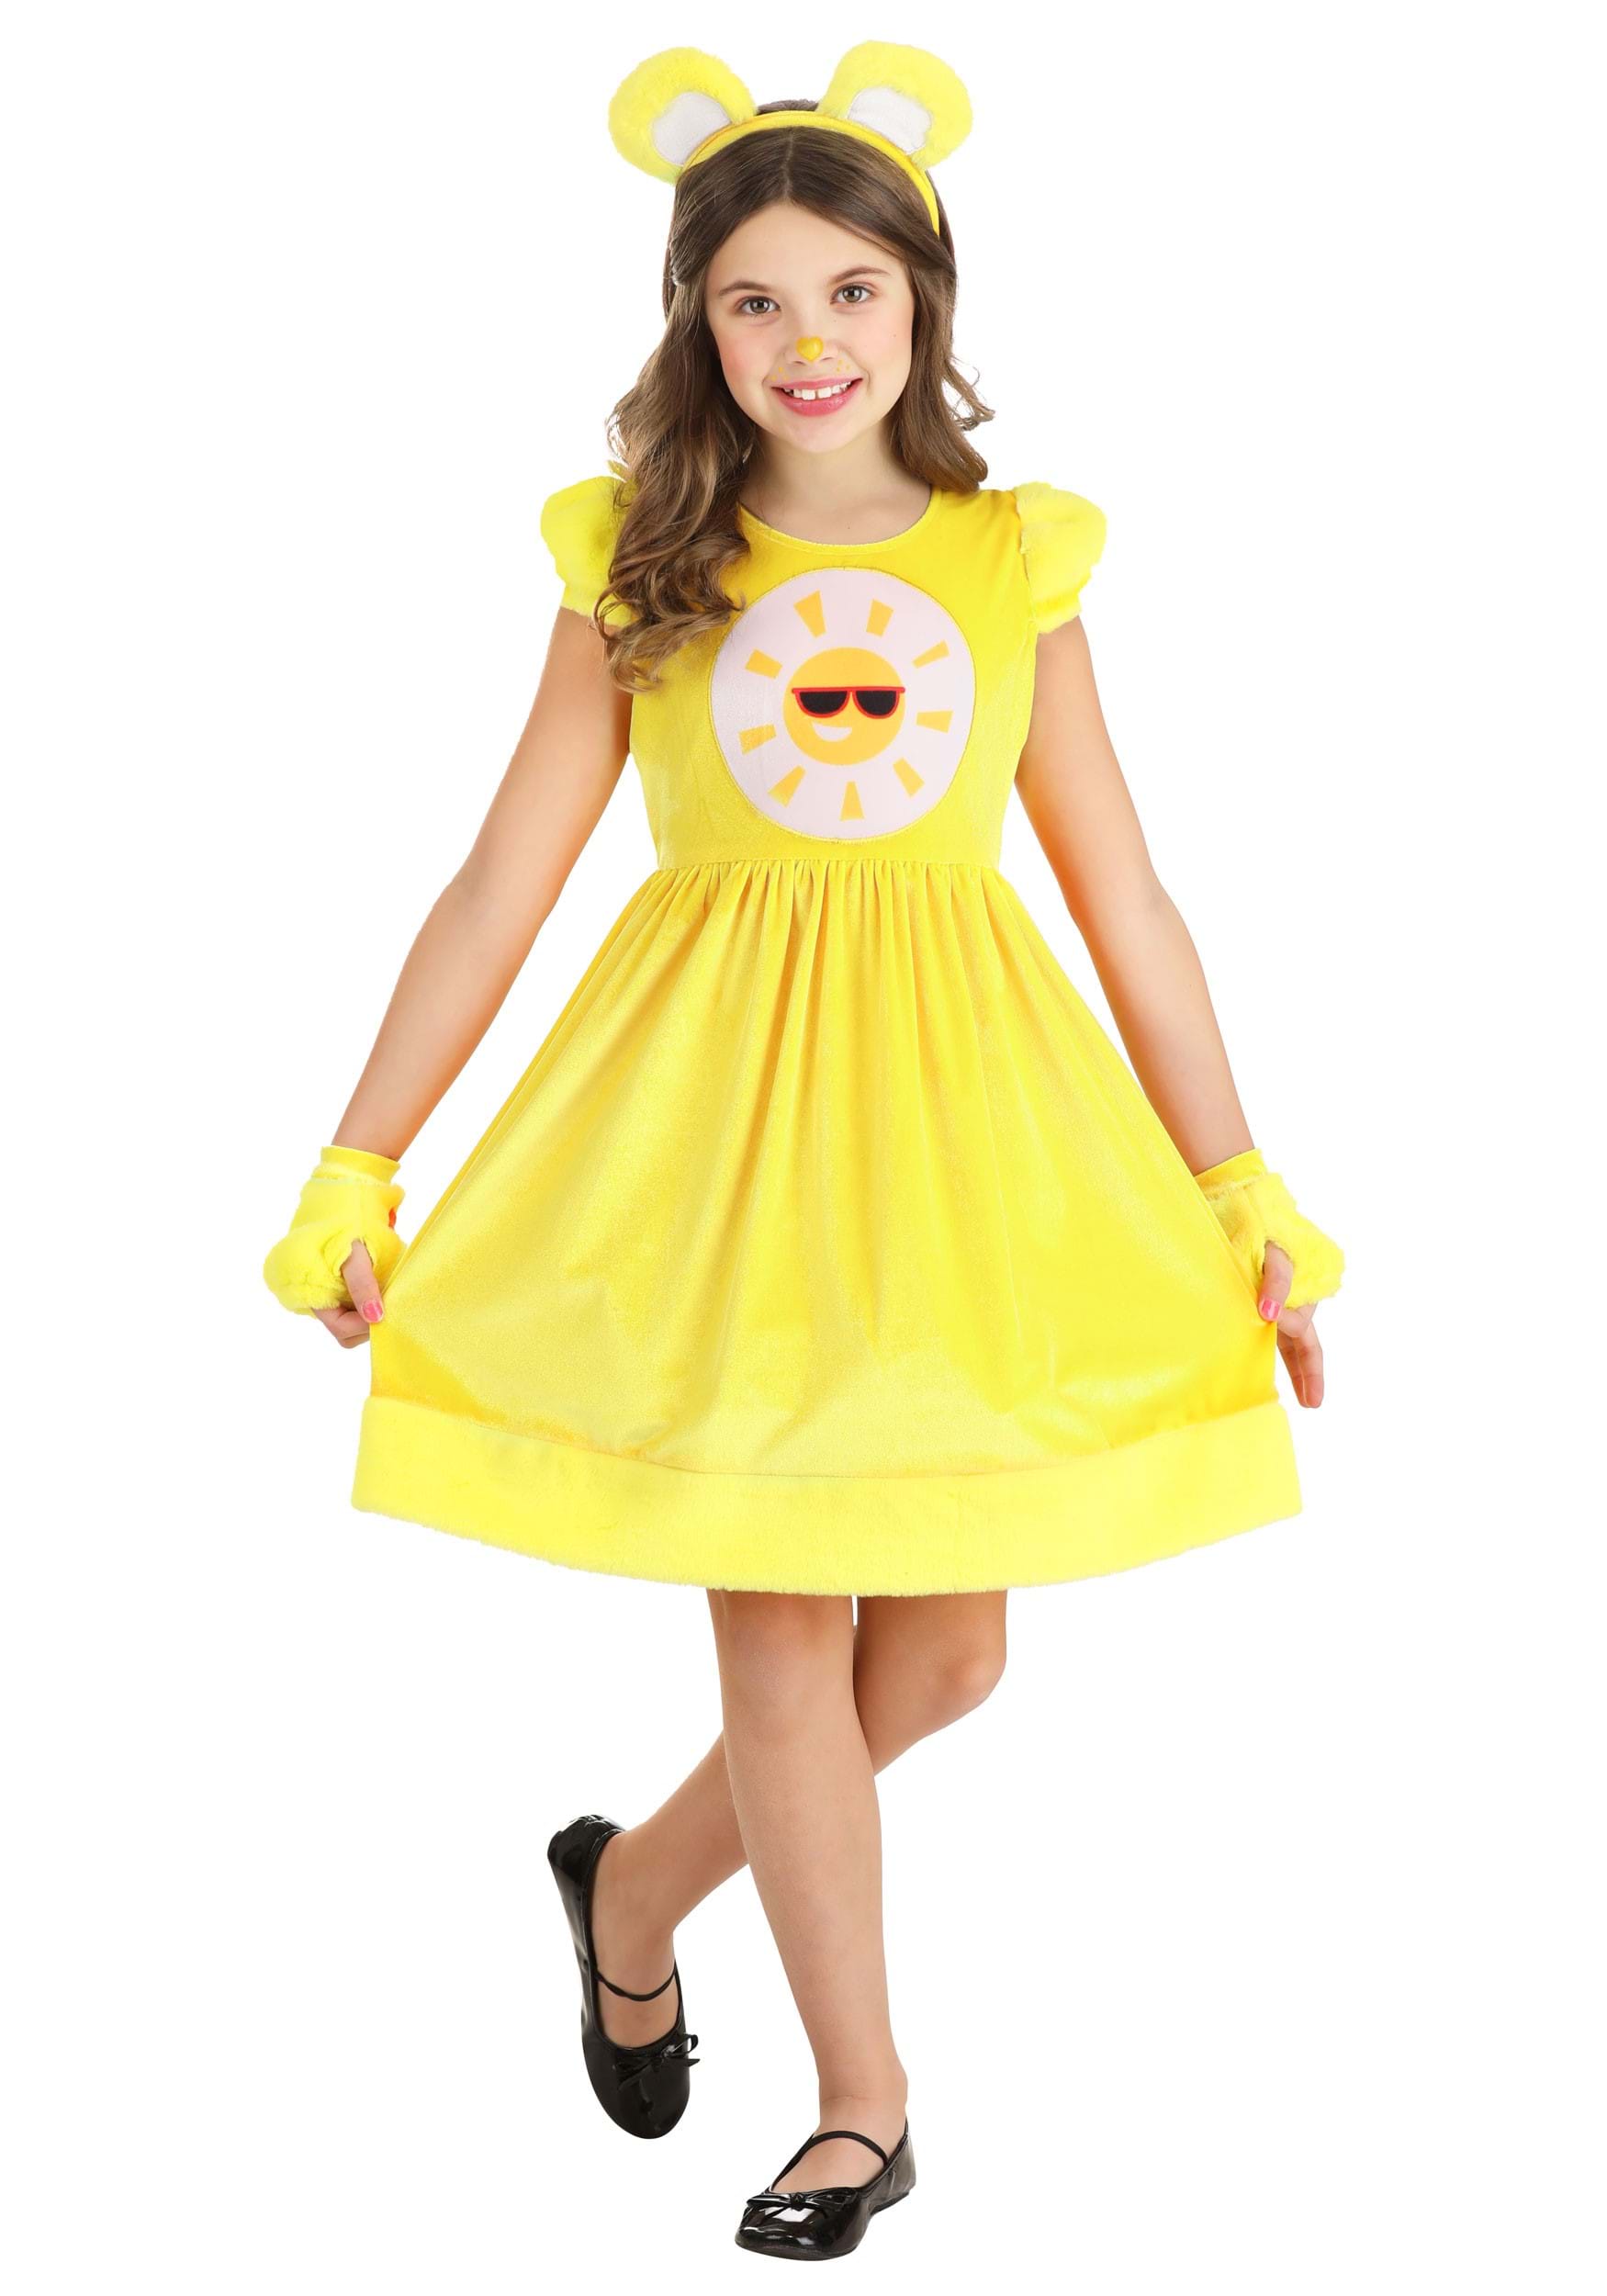 Funshine Bear Party Dress Costume for Girls